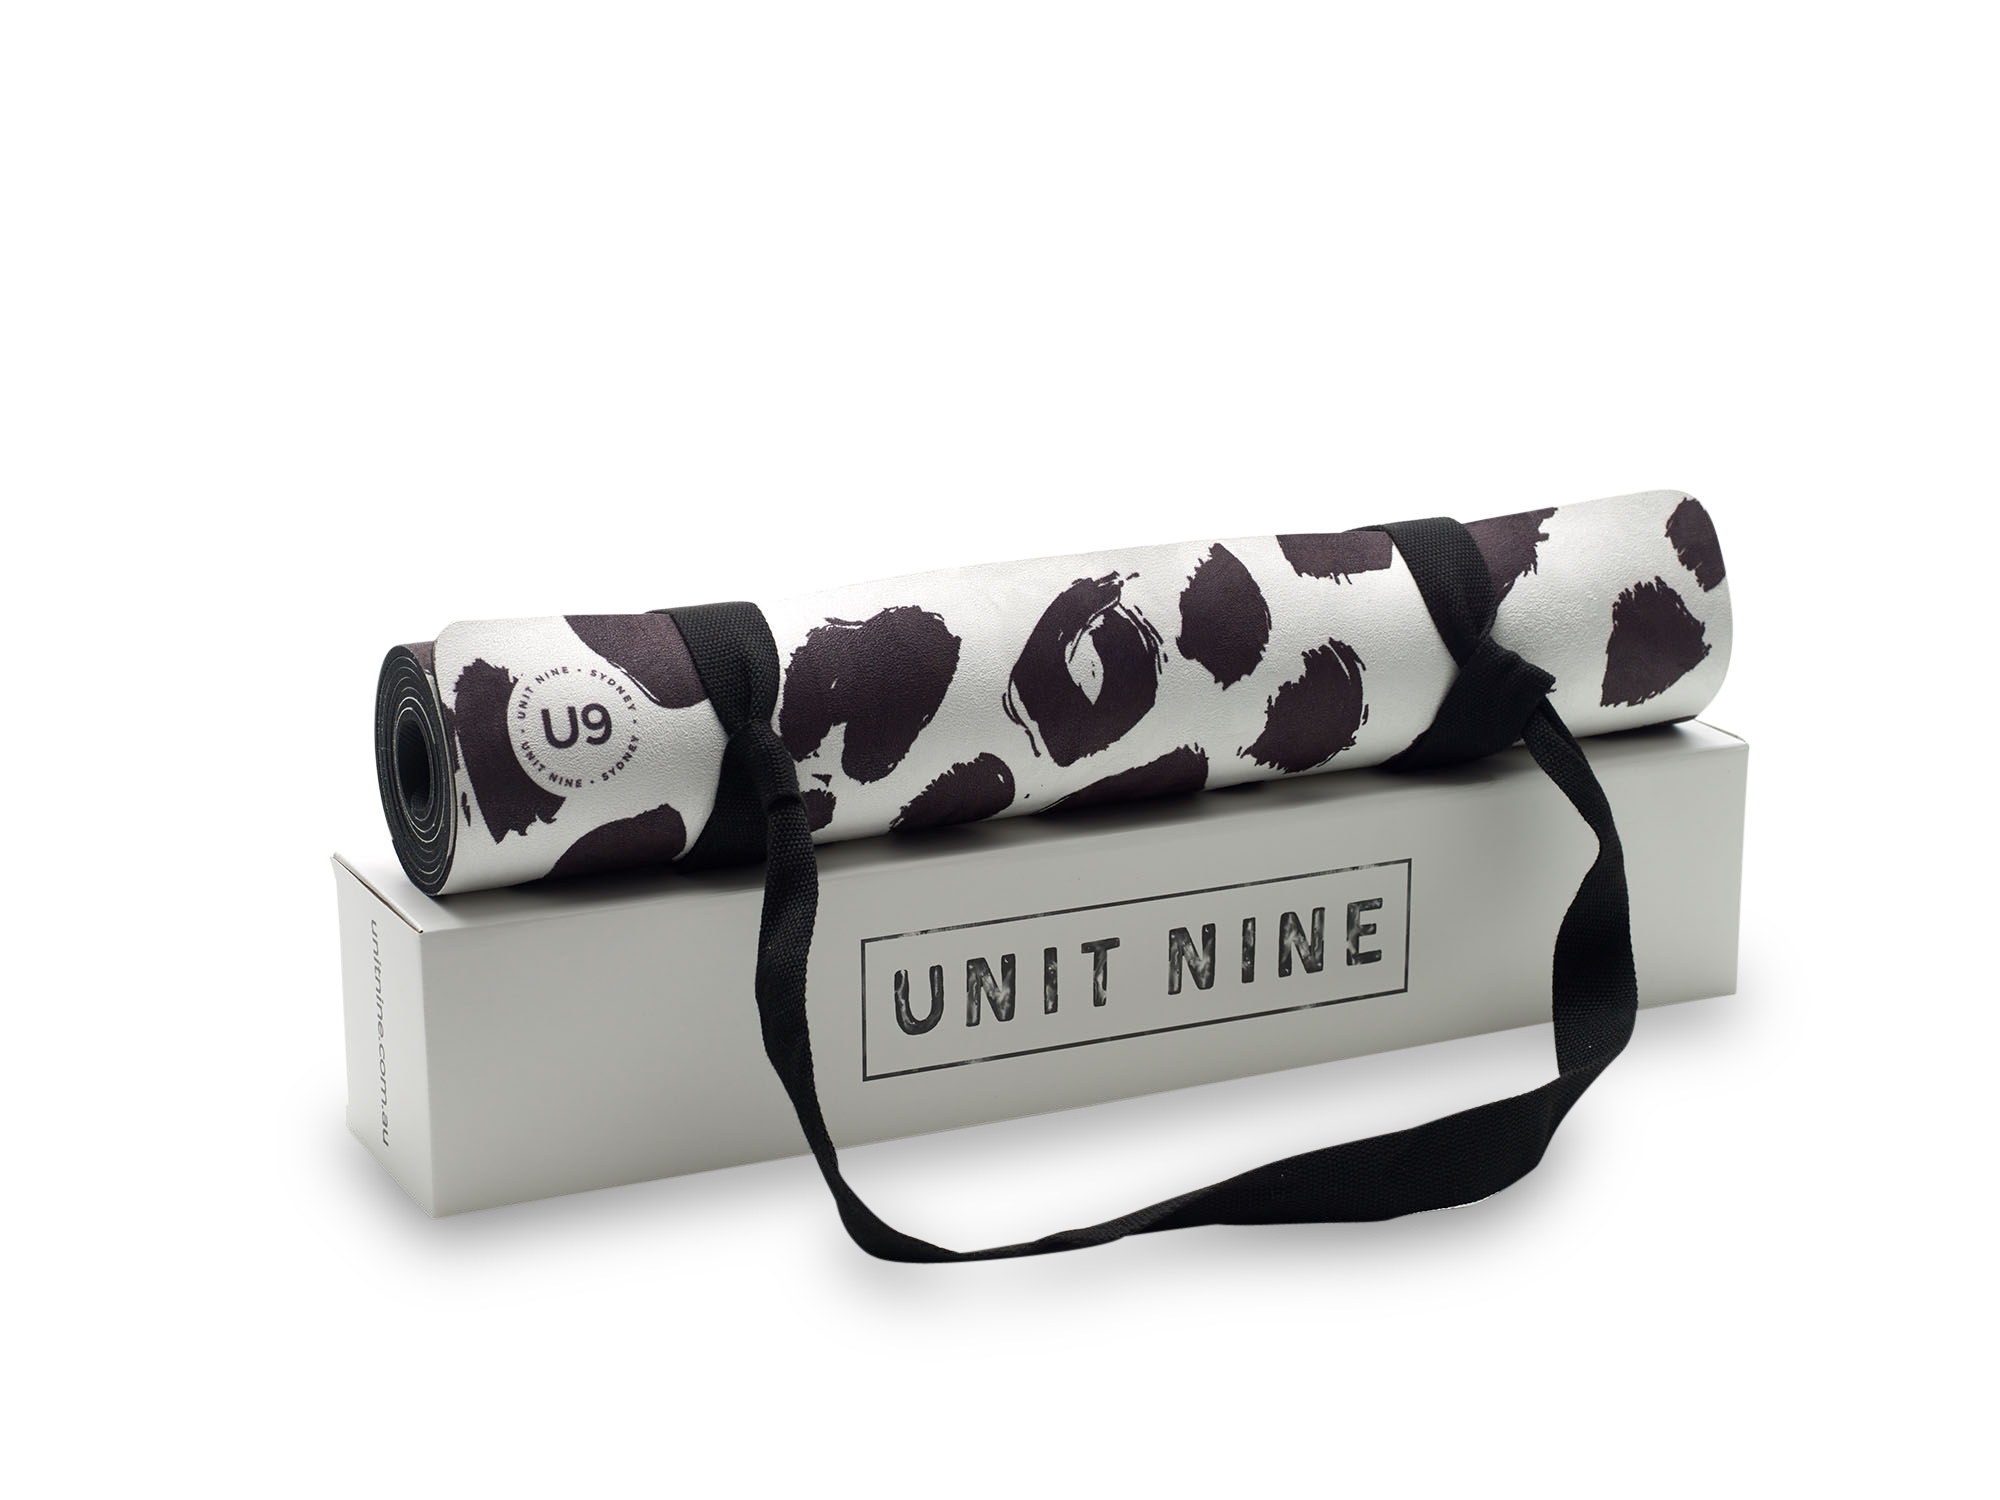 UNIT NINE White Leopard Yoga Mat, Unit Nine